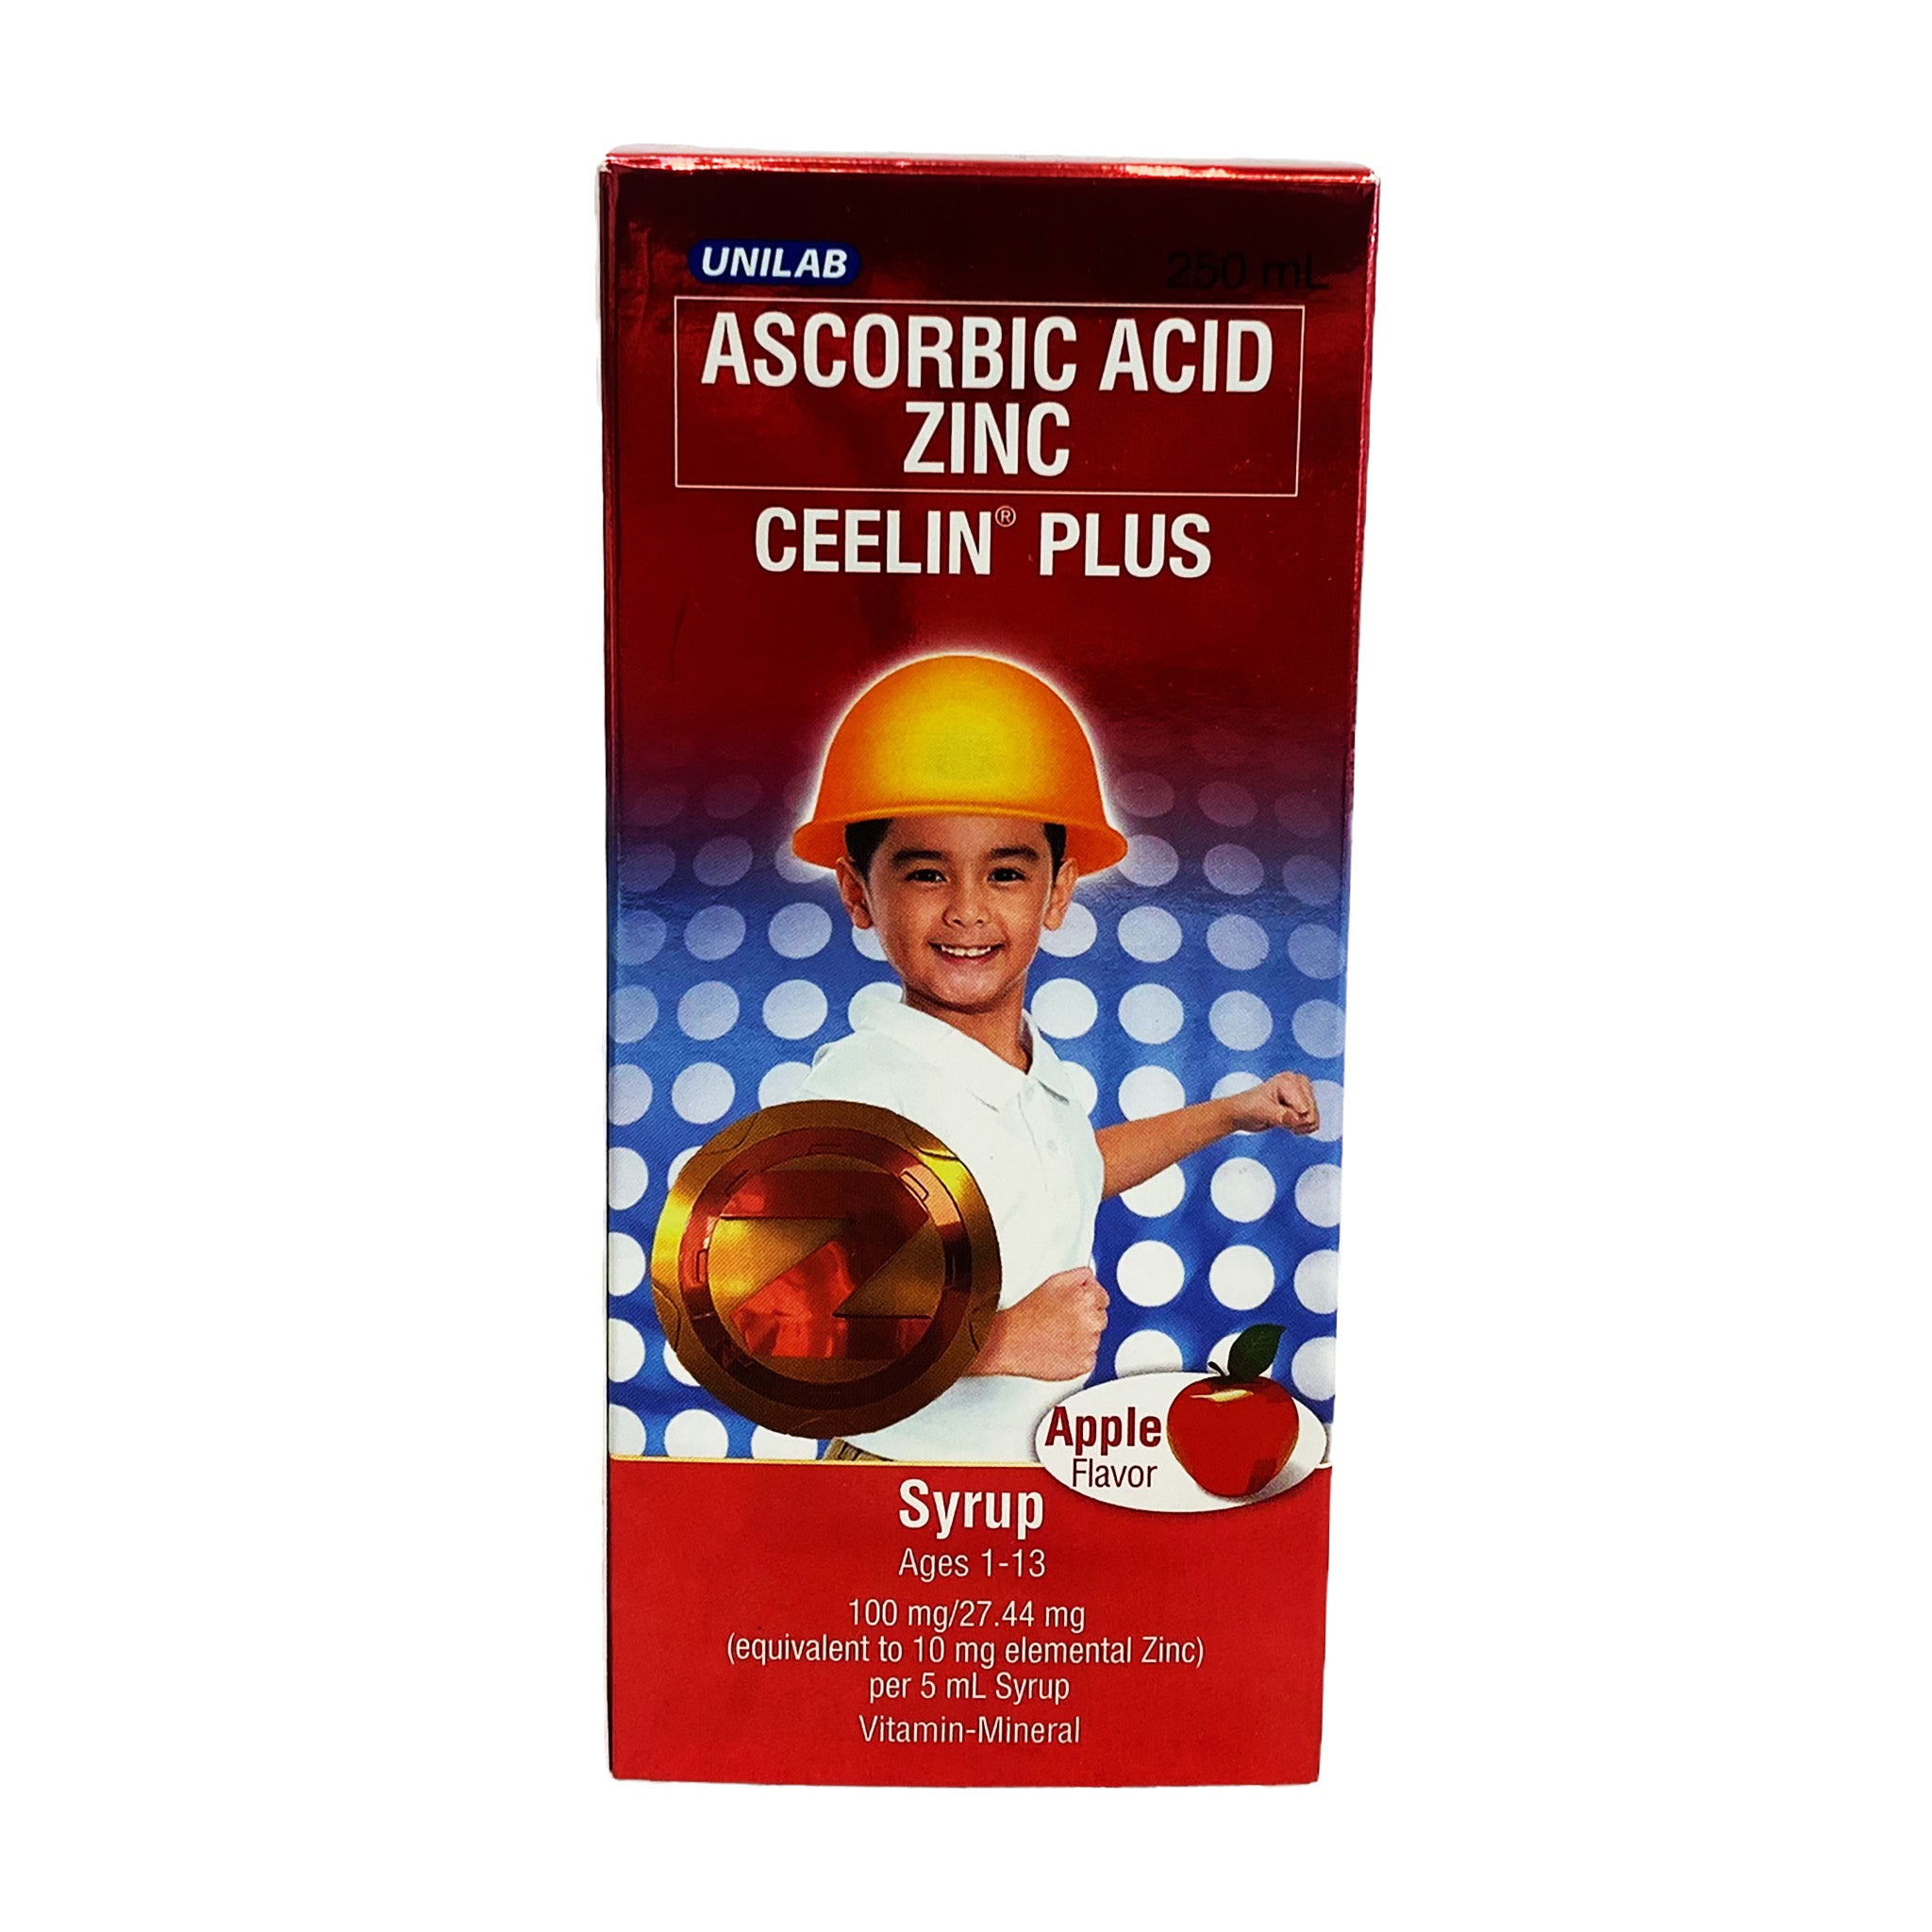 UNILAB Ascorbic Acid Zinc Ceelin Plus 8.45oz (250mL) - Just Asian Food